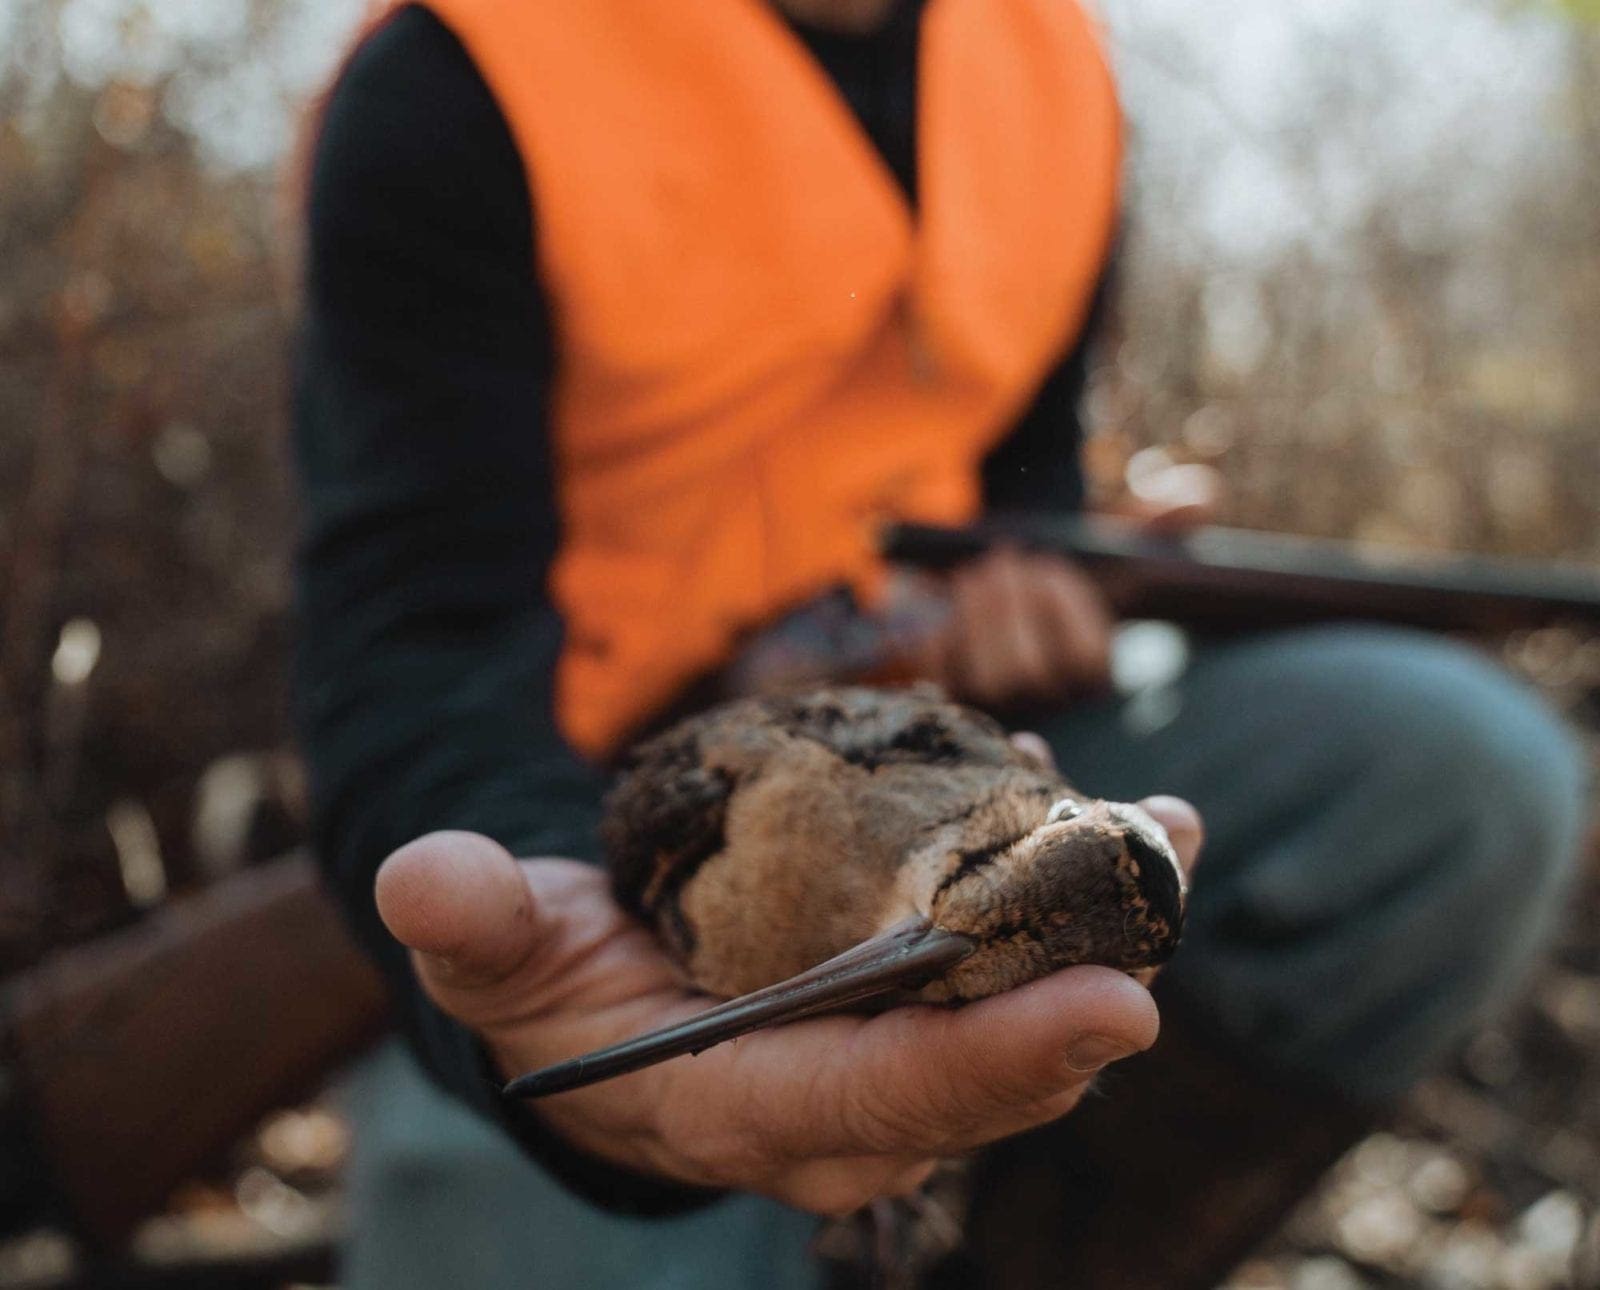 A bird hunter in Connecticut